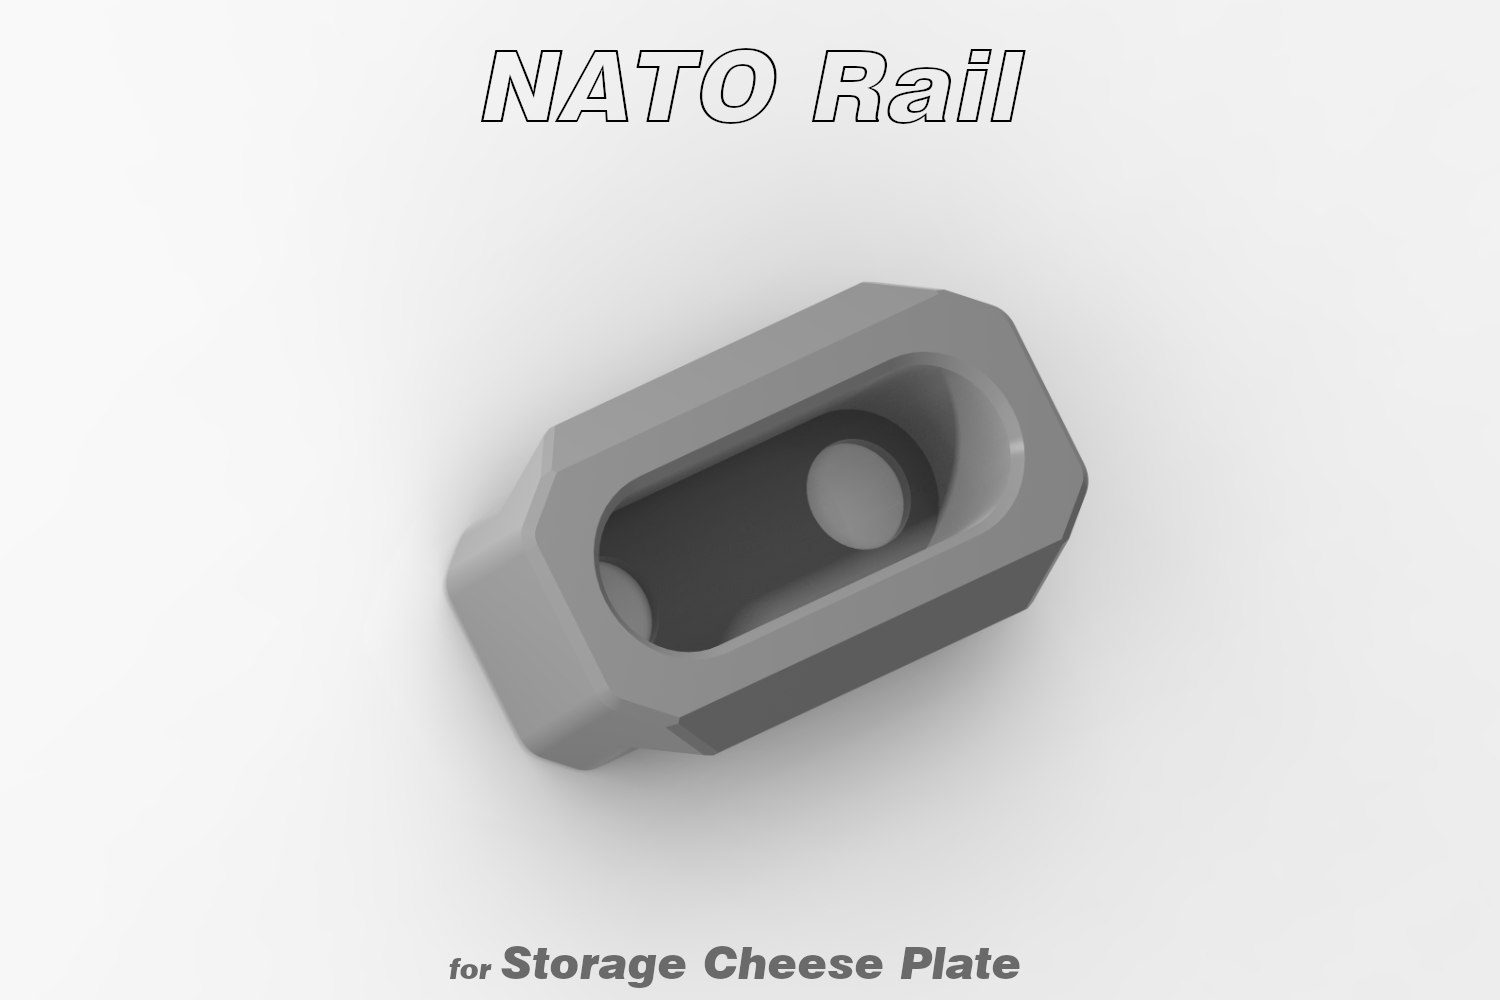 NATO Rail (for Storage Cheese Plate)